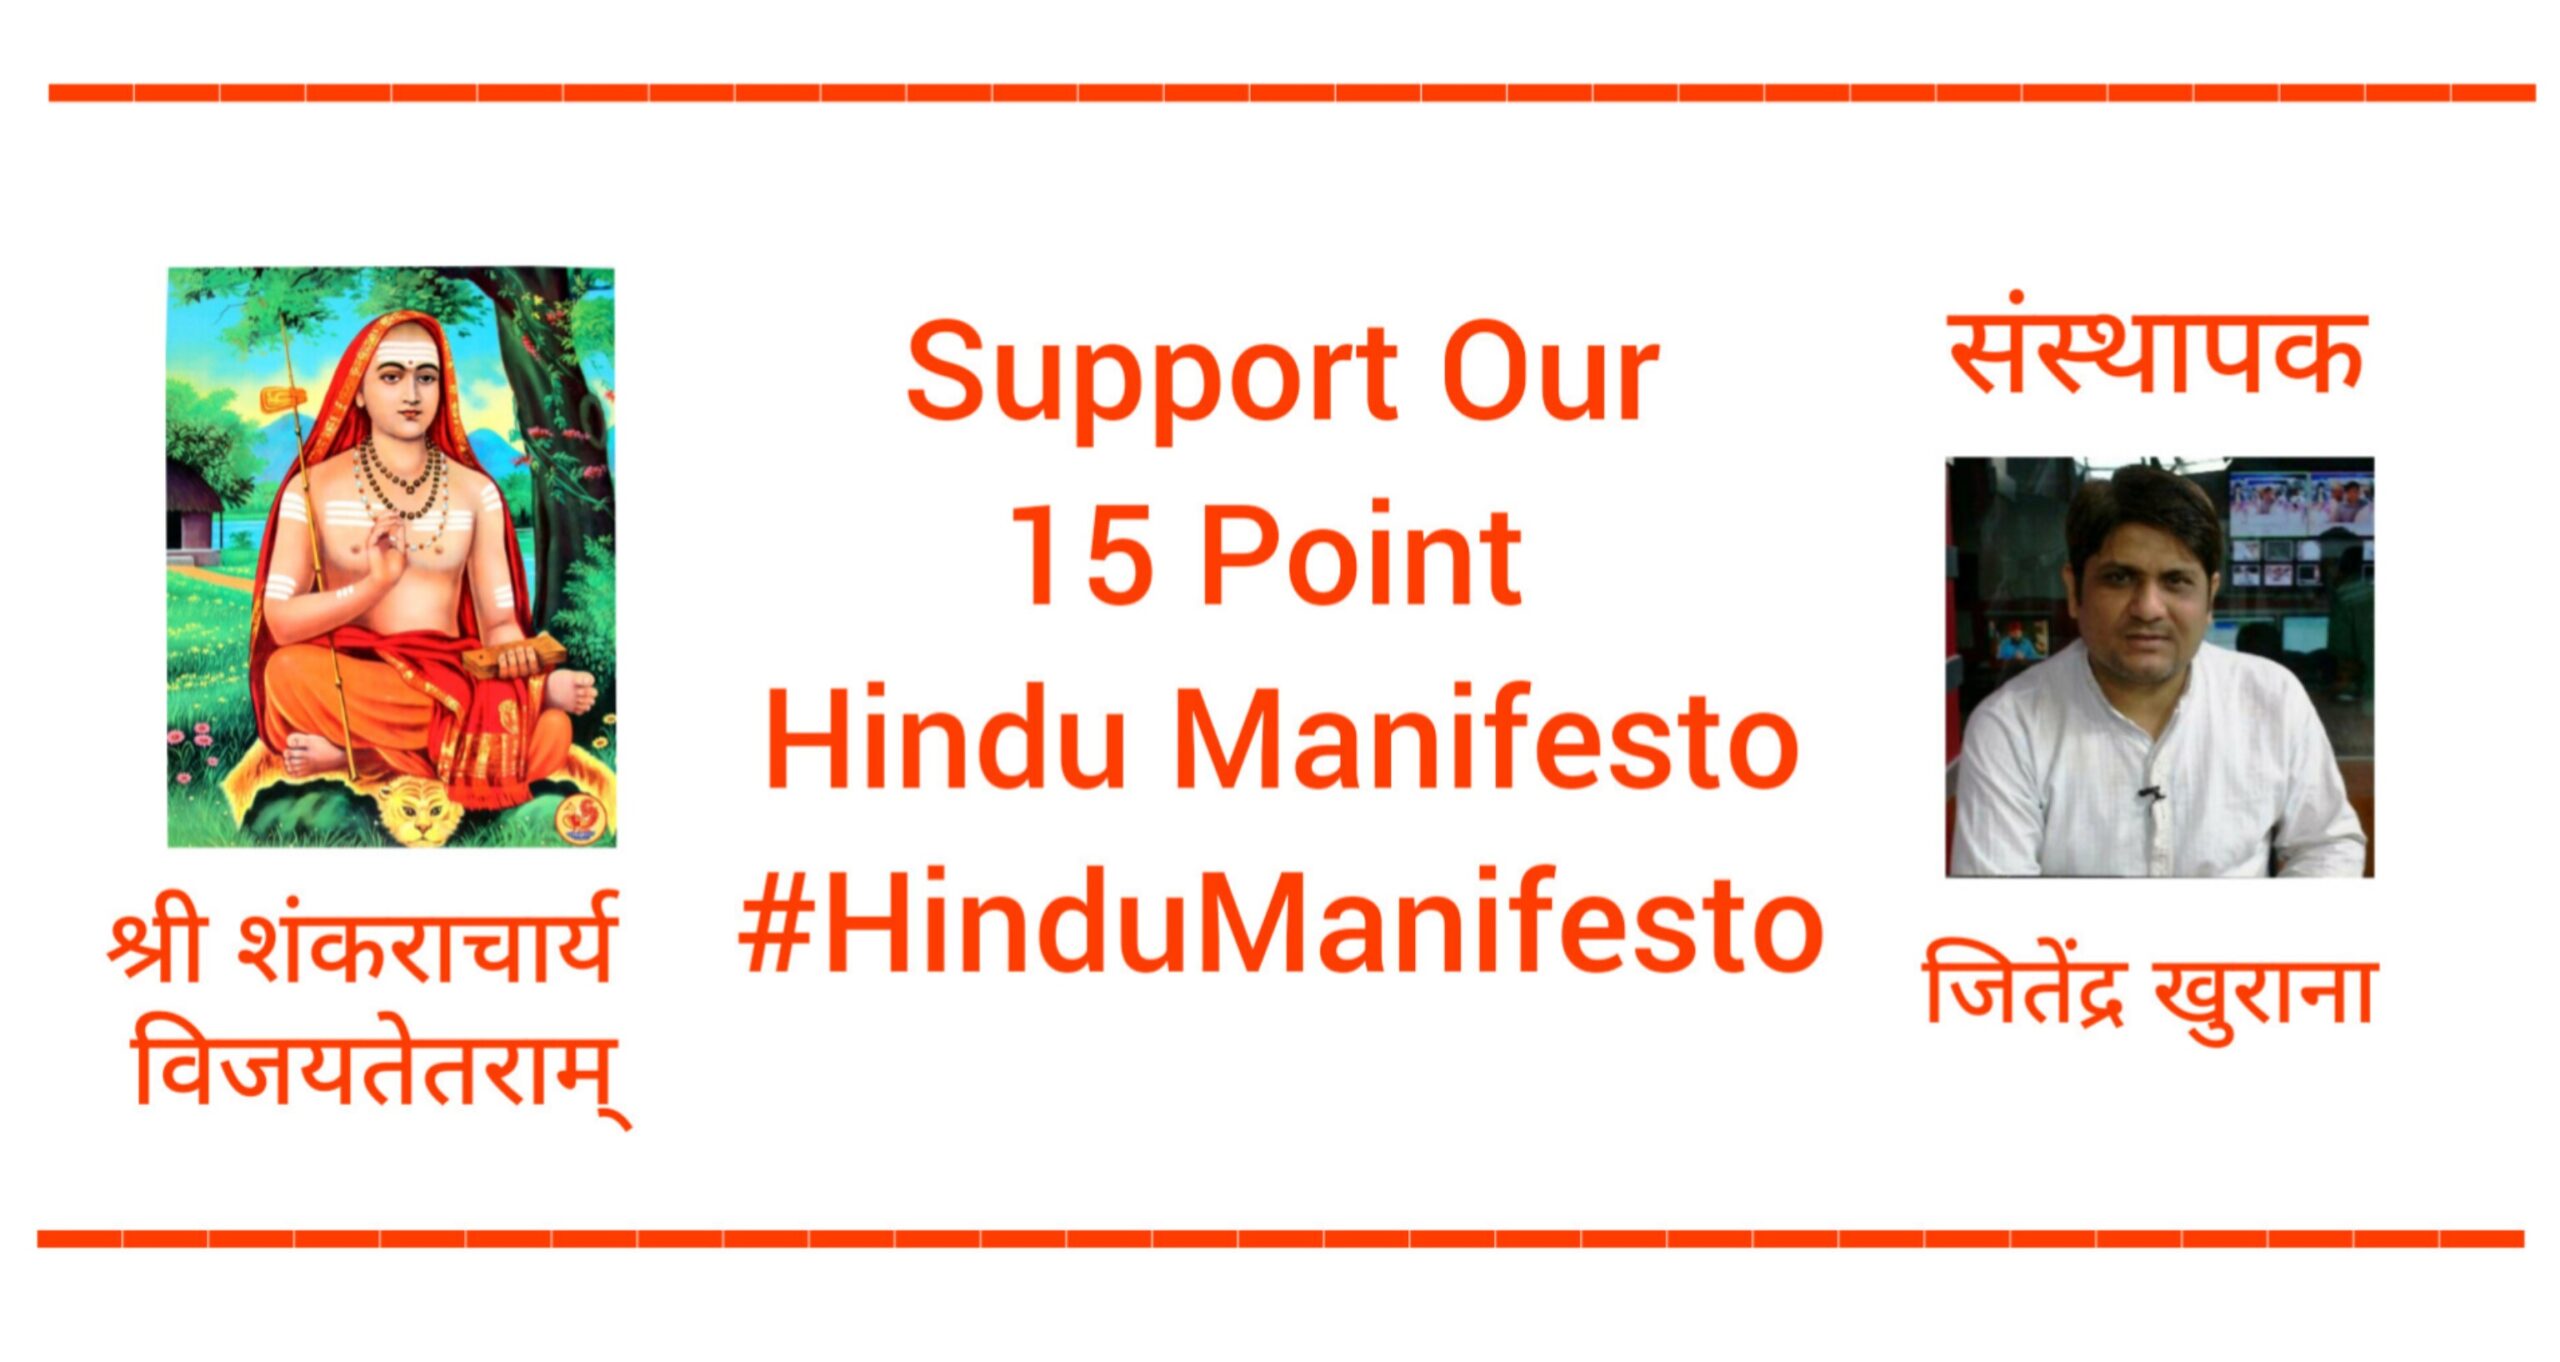 Hindu Manifesto